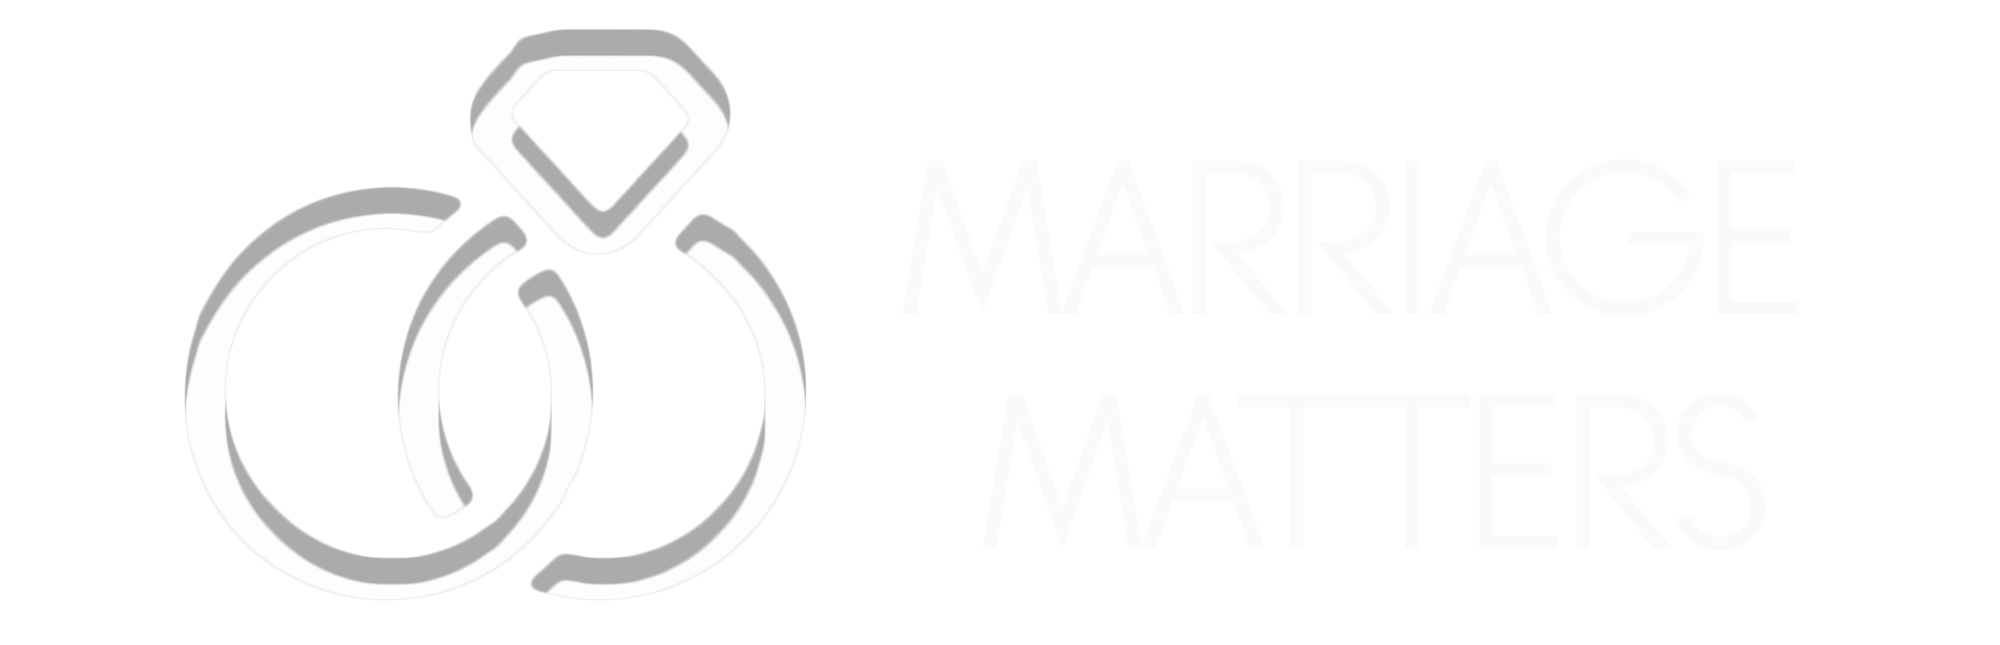 marriage matters international logo white